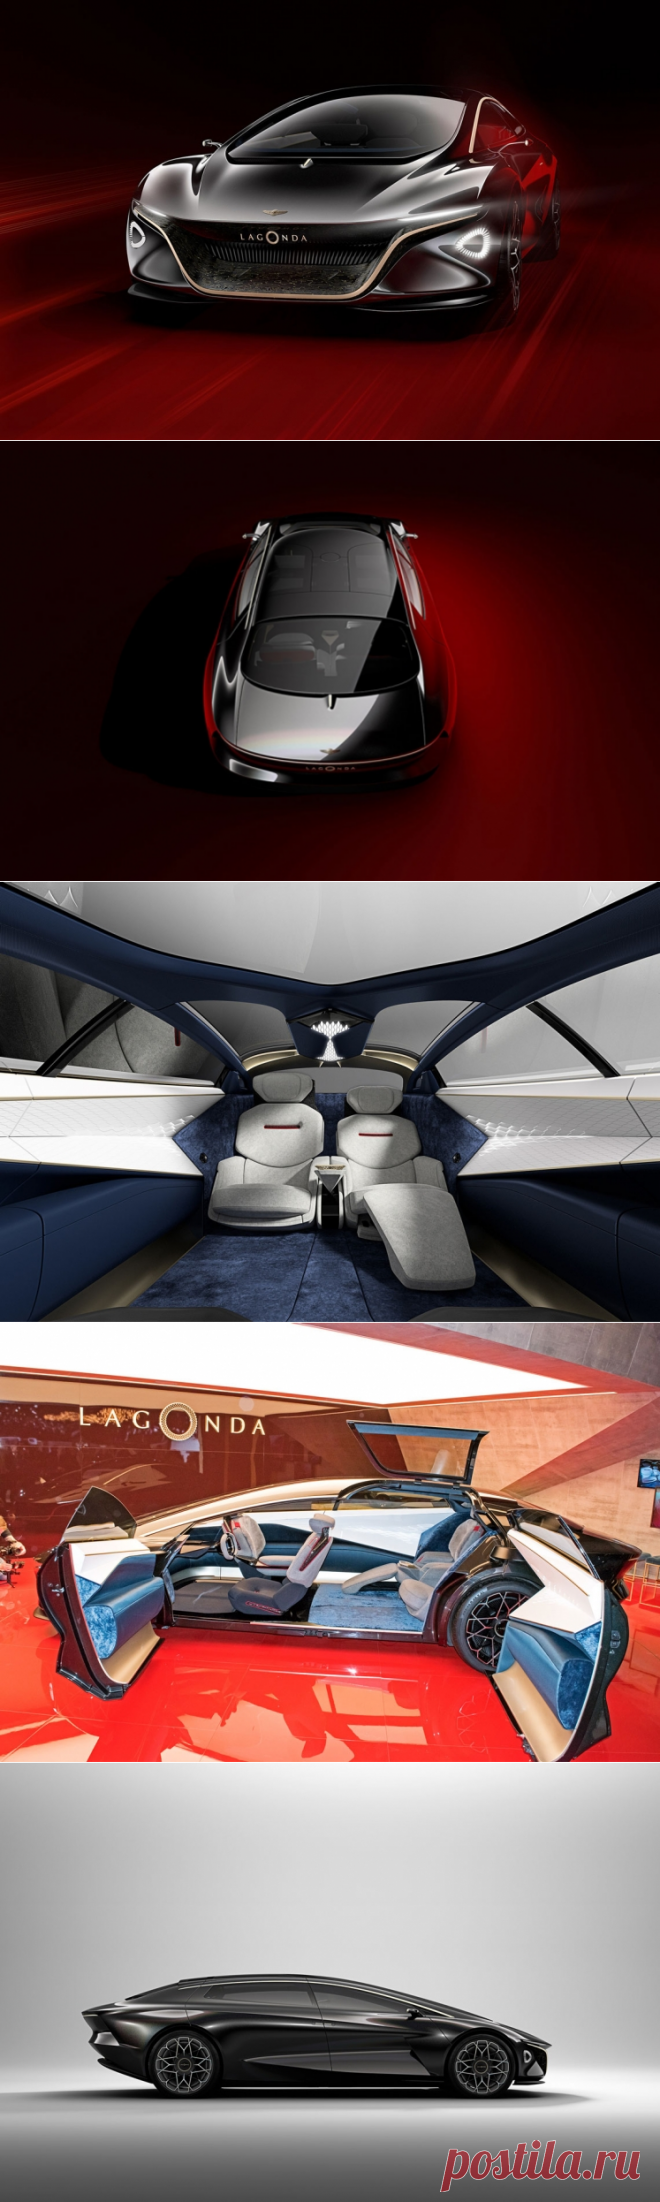 Самый роскошный электрокар Lagonda Vision от Aston Martin